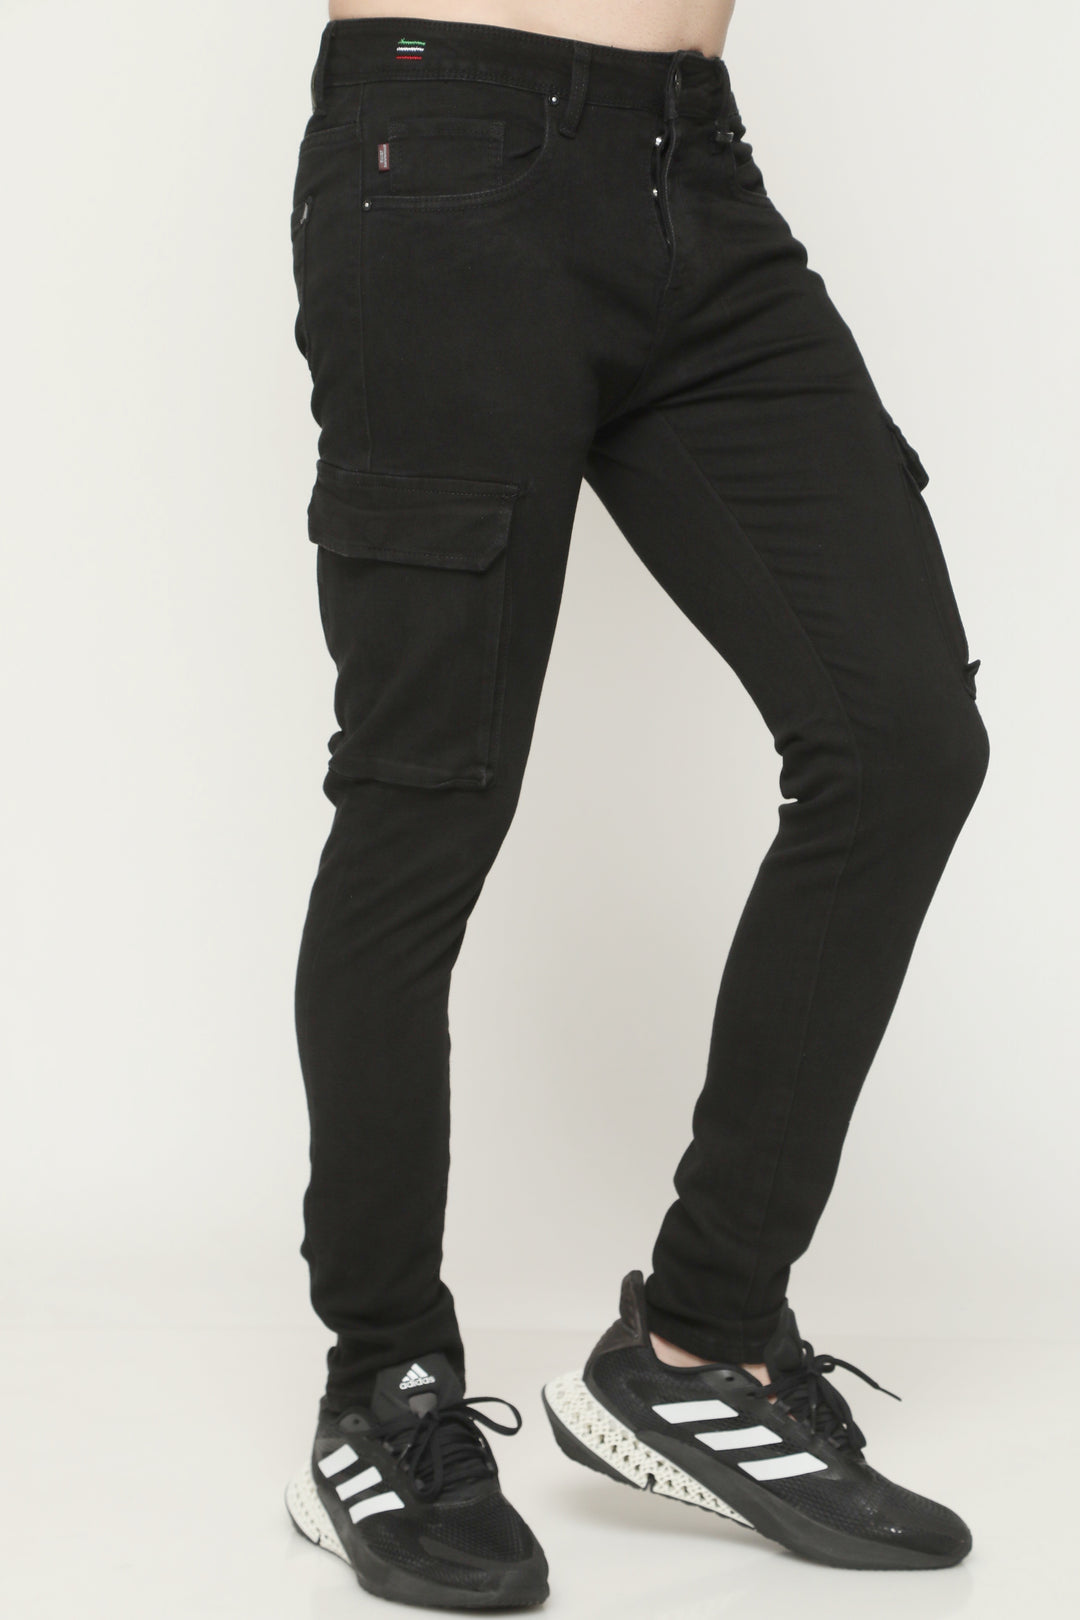 דגמח ג'ינס סקיני שחור - canavaro jeans